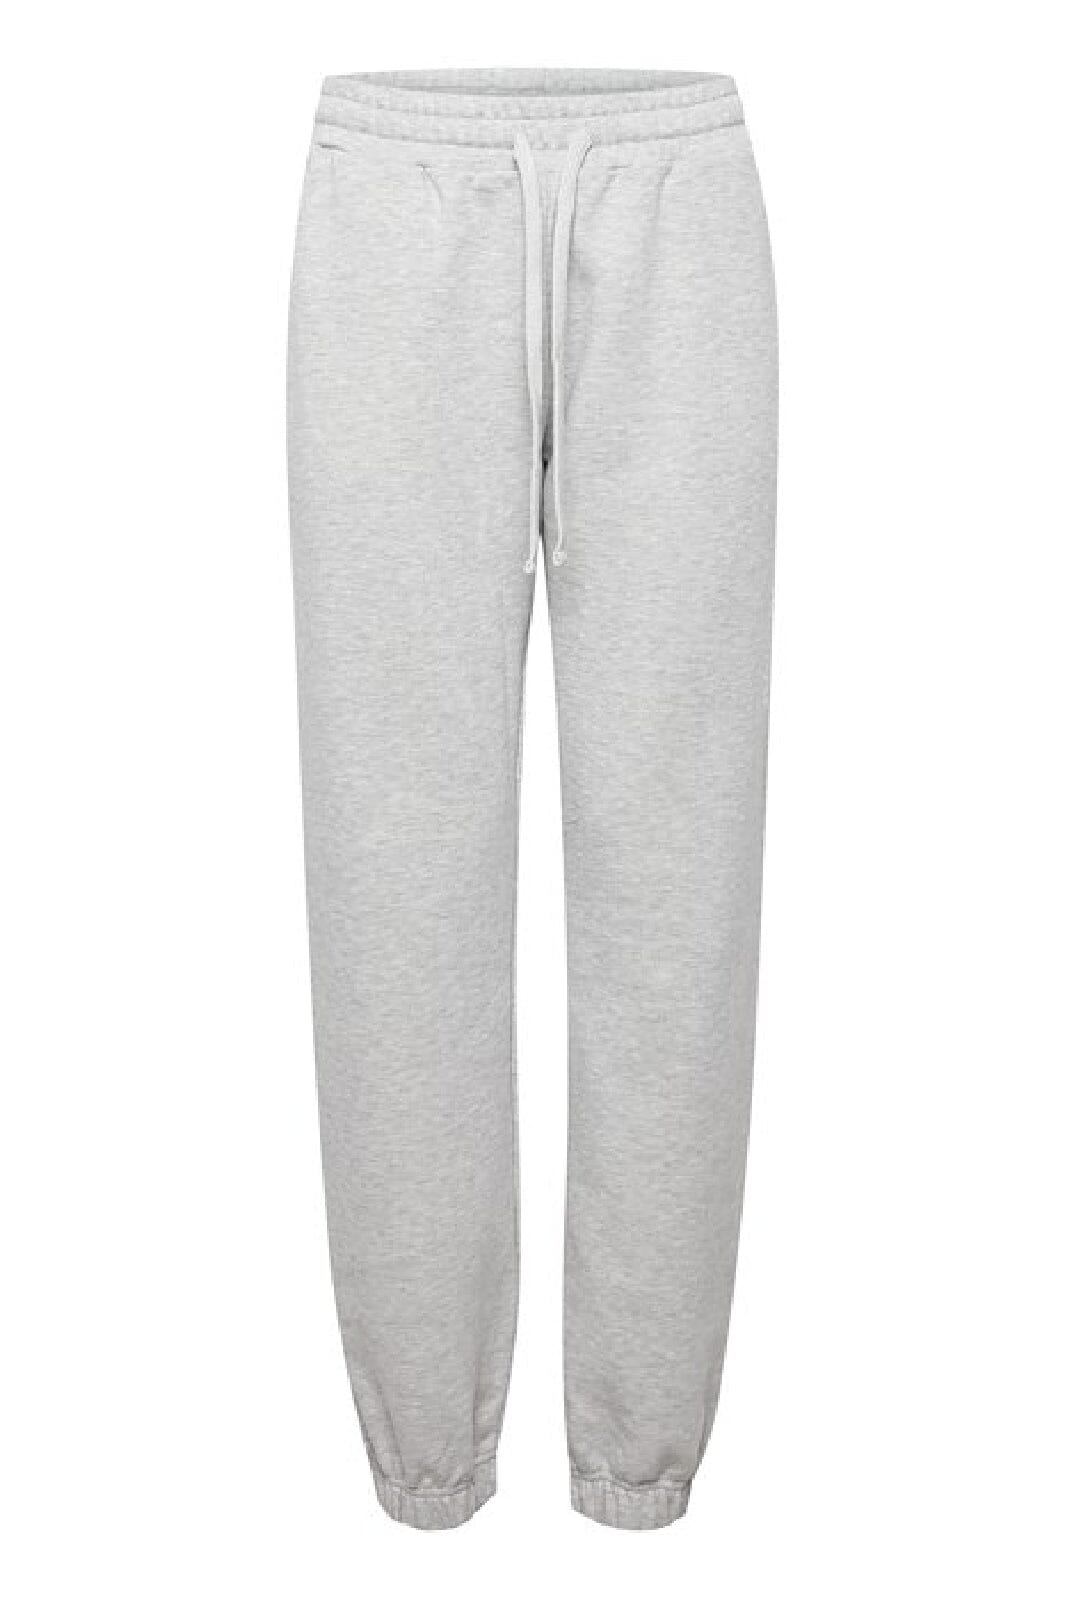 The Jogg Concept - Jcsafine Jogging Pants - 201747 Light Grey Melange Sweatpants 